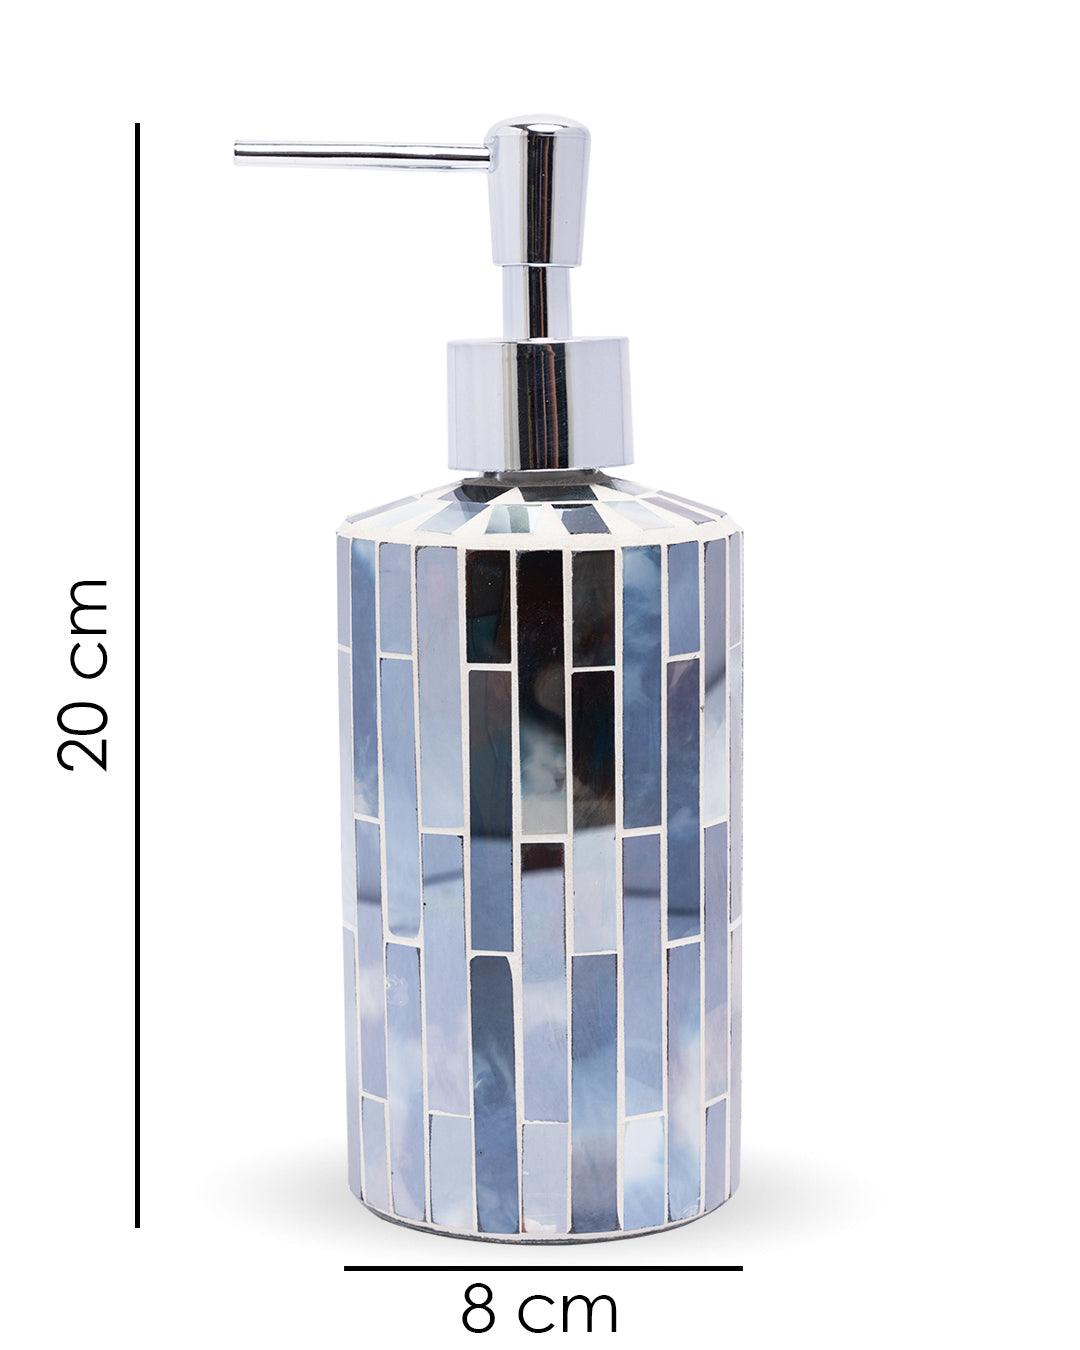 Market99 Soap Dispenser, Silver, Glass, 400 mL - MARKET 99